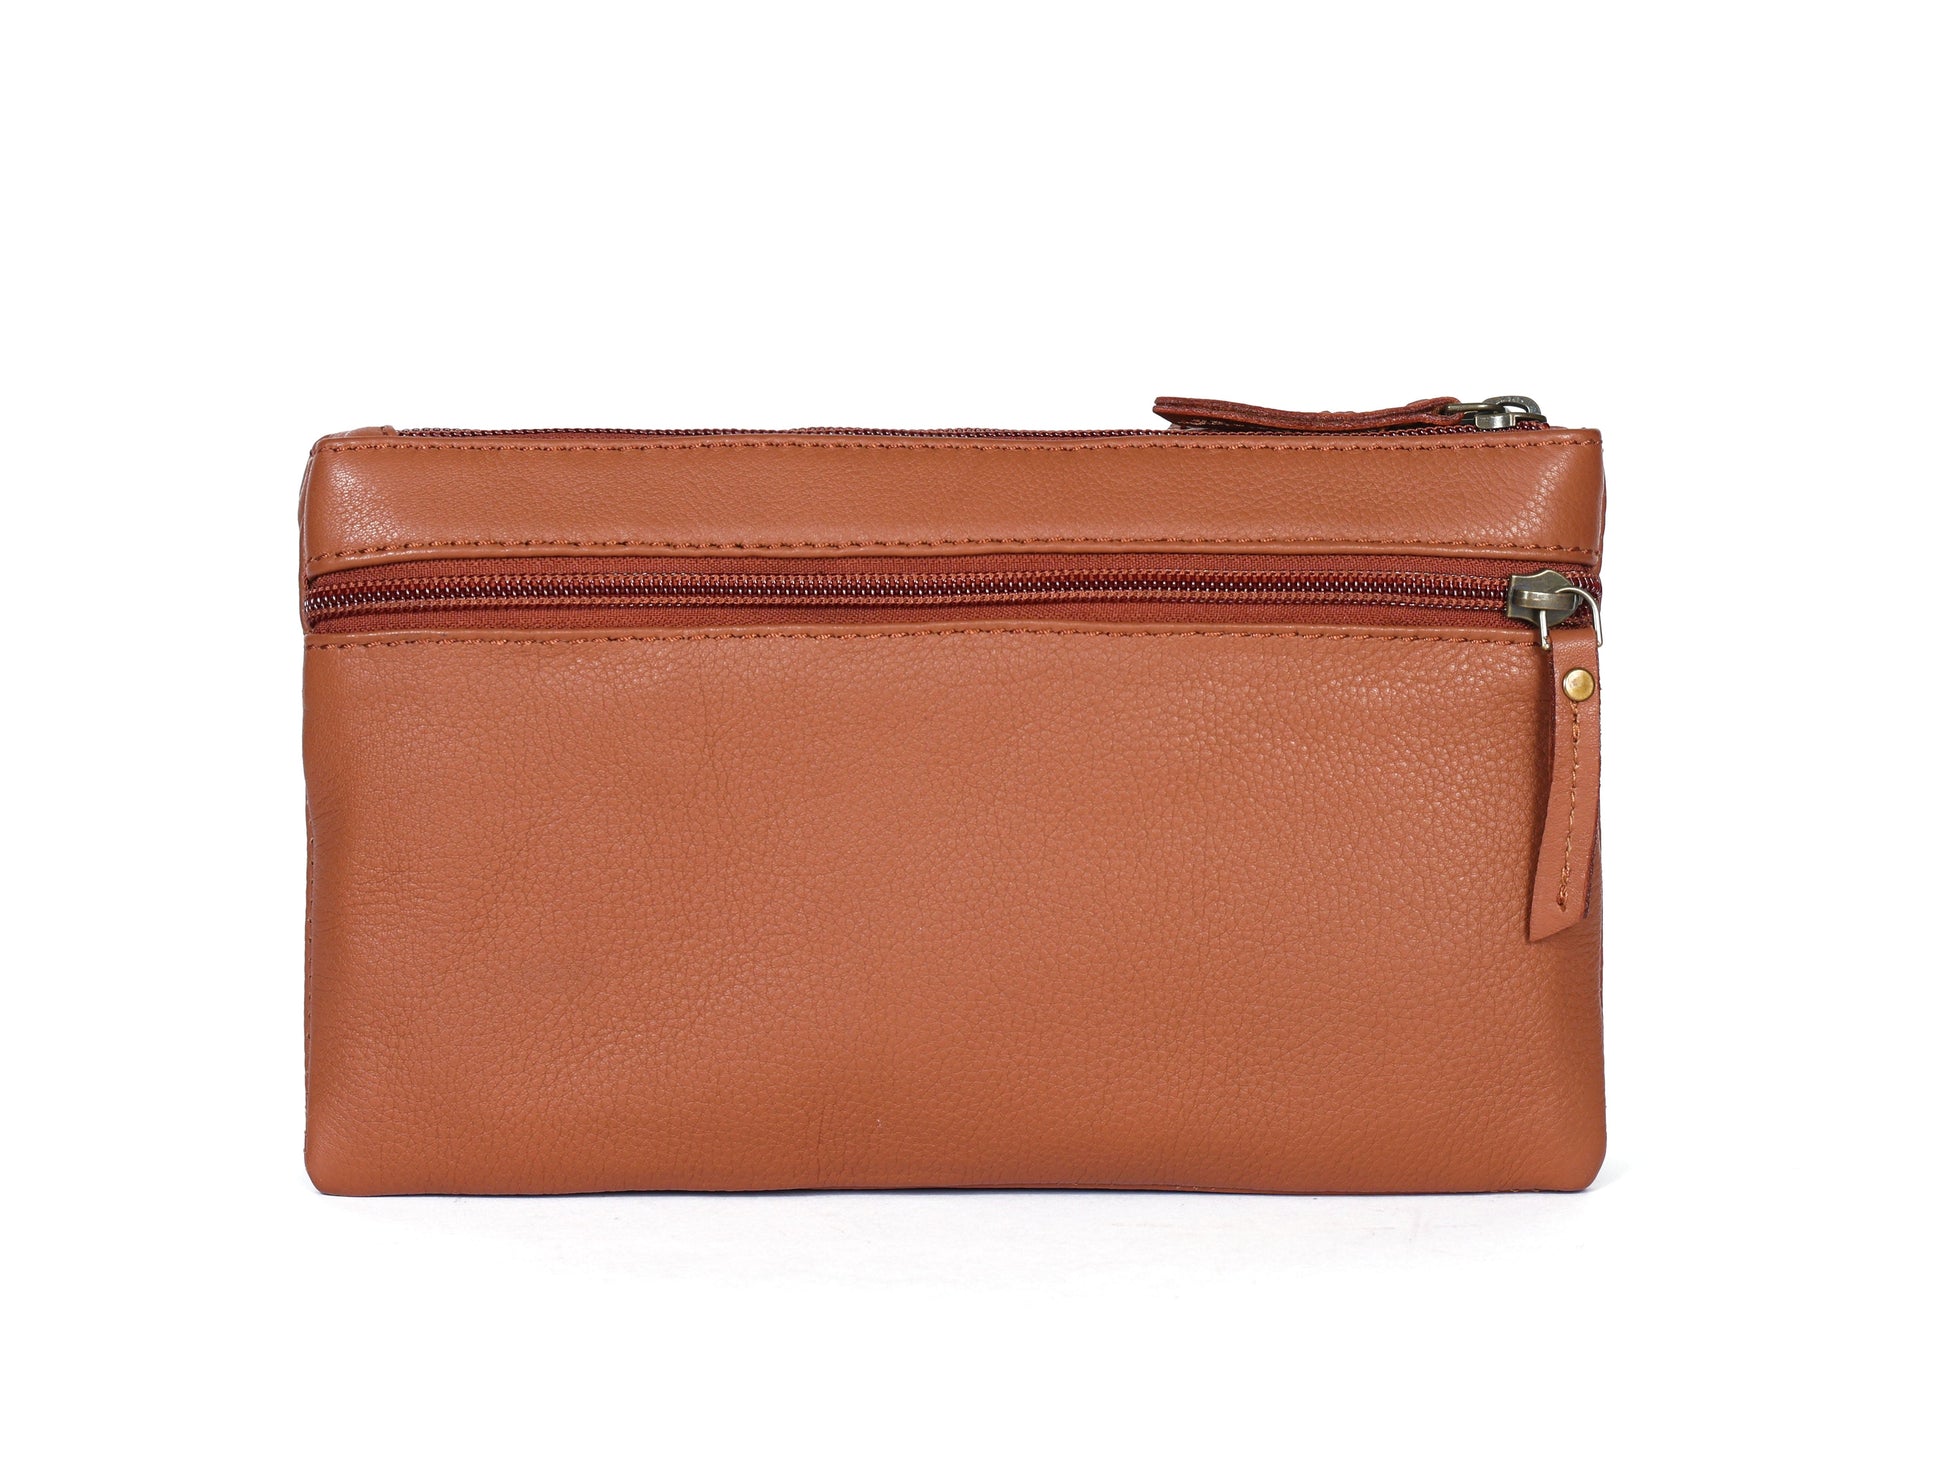 Effortless Elegance: Tan Soft Leather Sling Bag for Stylish Convenience. - CELTICINDIA